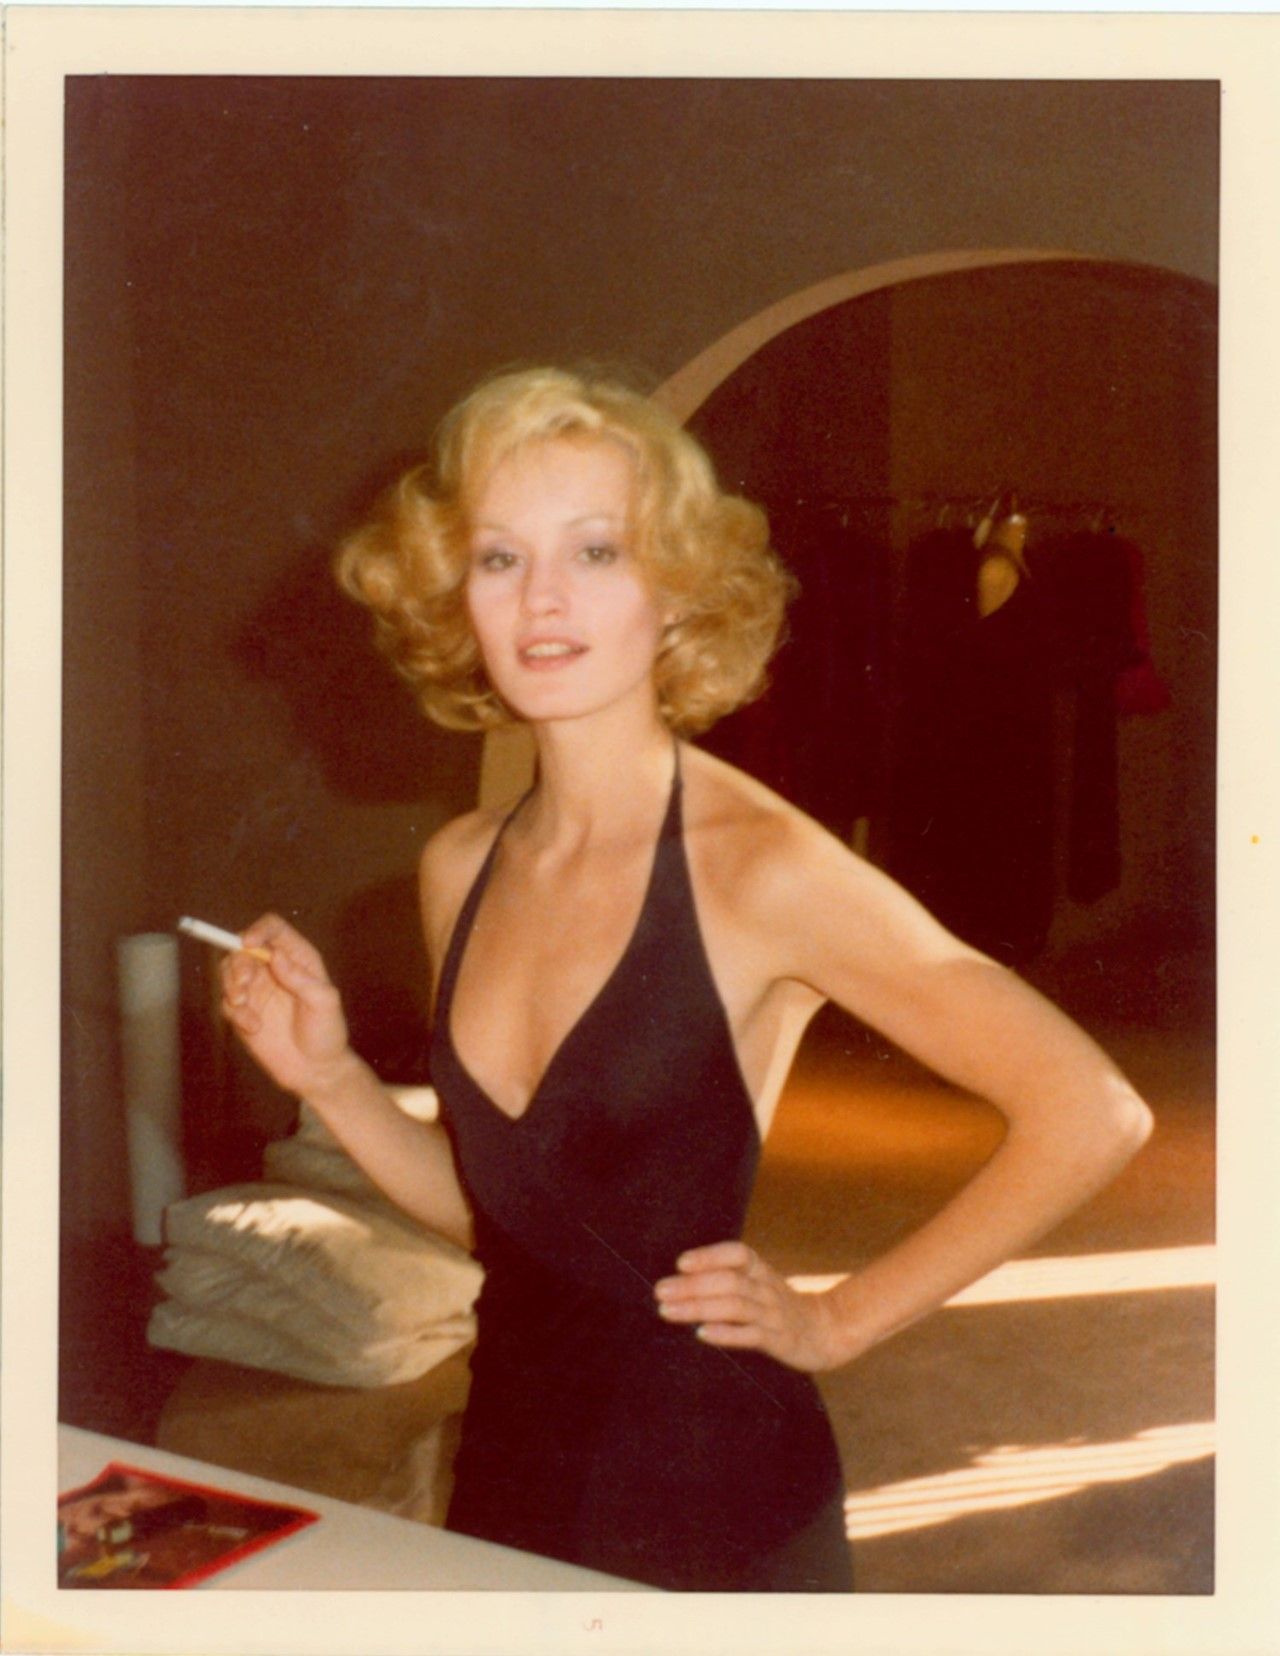 Happy Birthday Jessica Lange! Here the star is captured by Antonio Lopez in Paris, 1974 